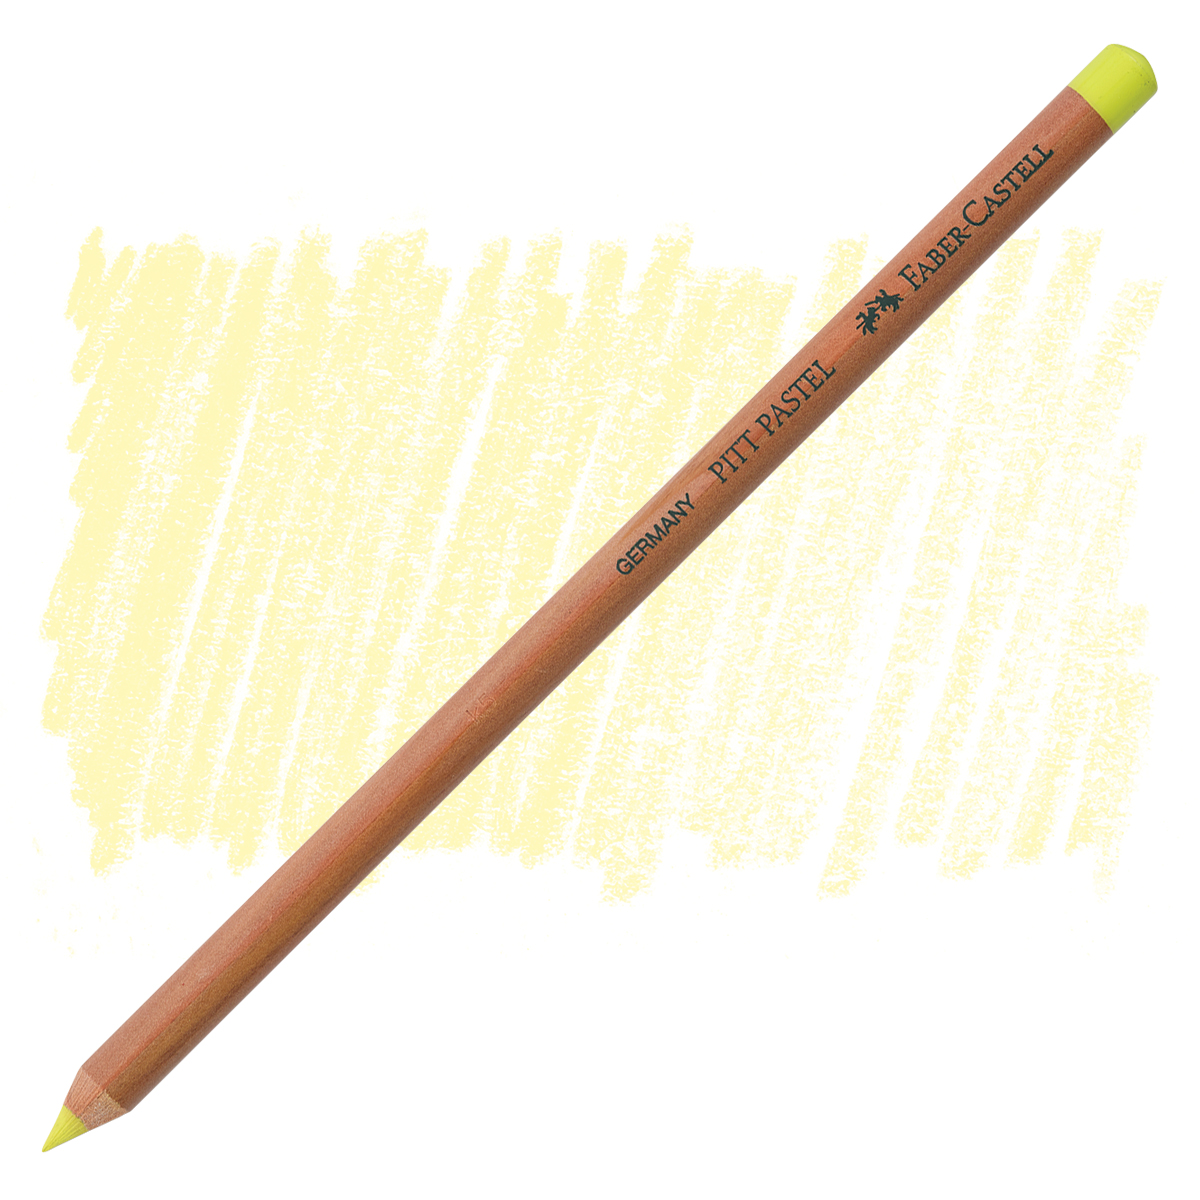 Faber-Castell Pitt Pastel Pencil - Coral